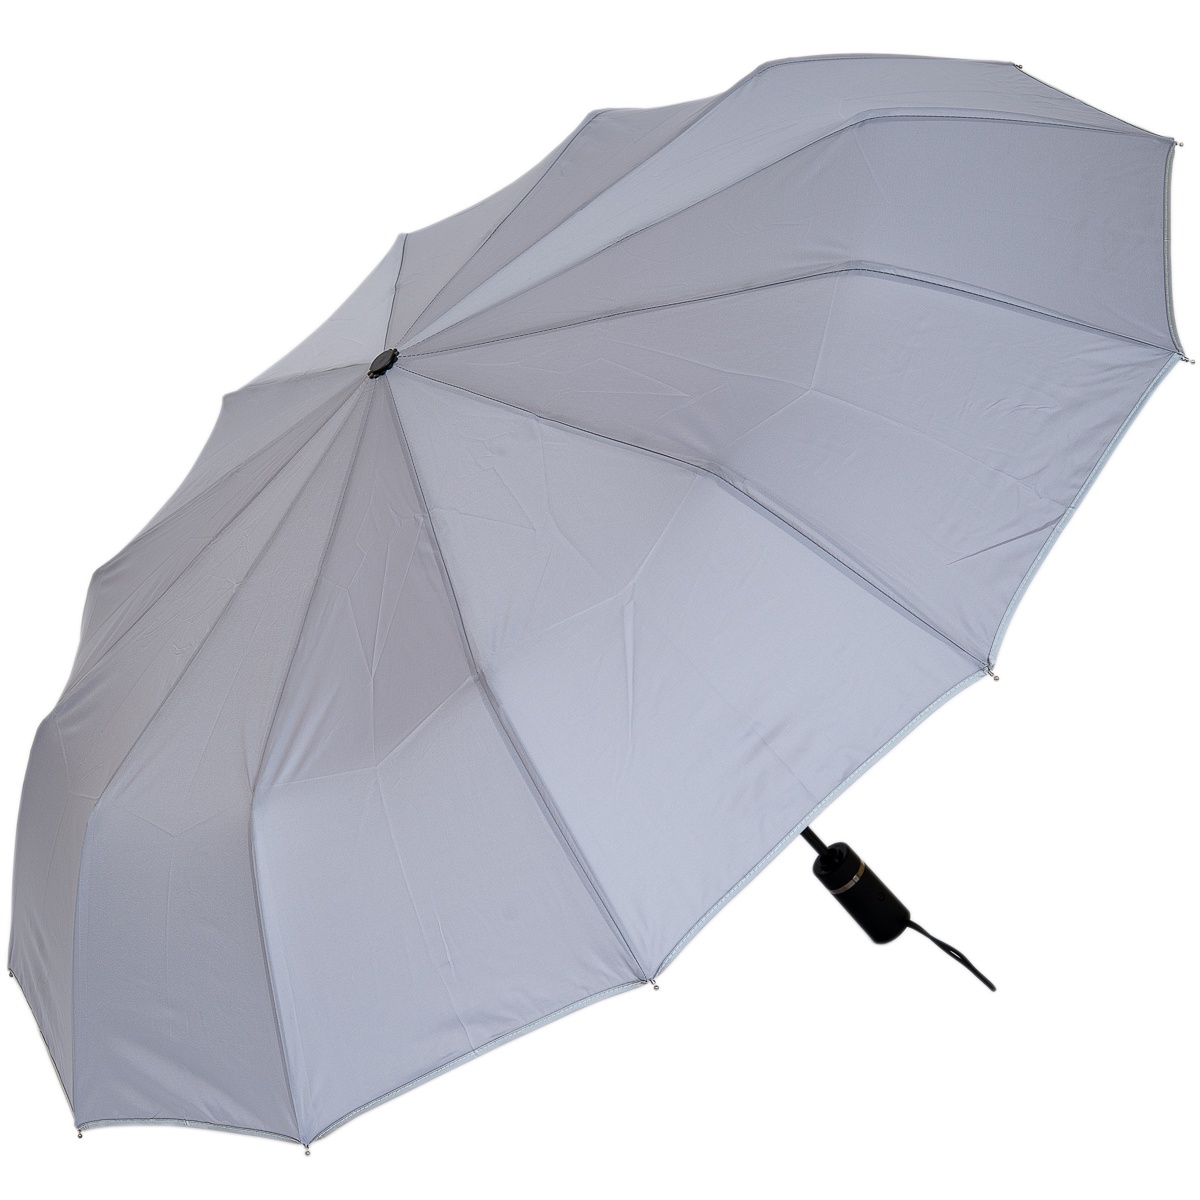 Характеристики зонтика. Зонт серый. Зонтик серебристый. Серебряный зонт. Зонт трость светло серый женский.